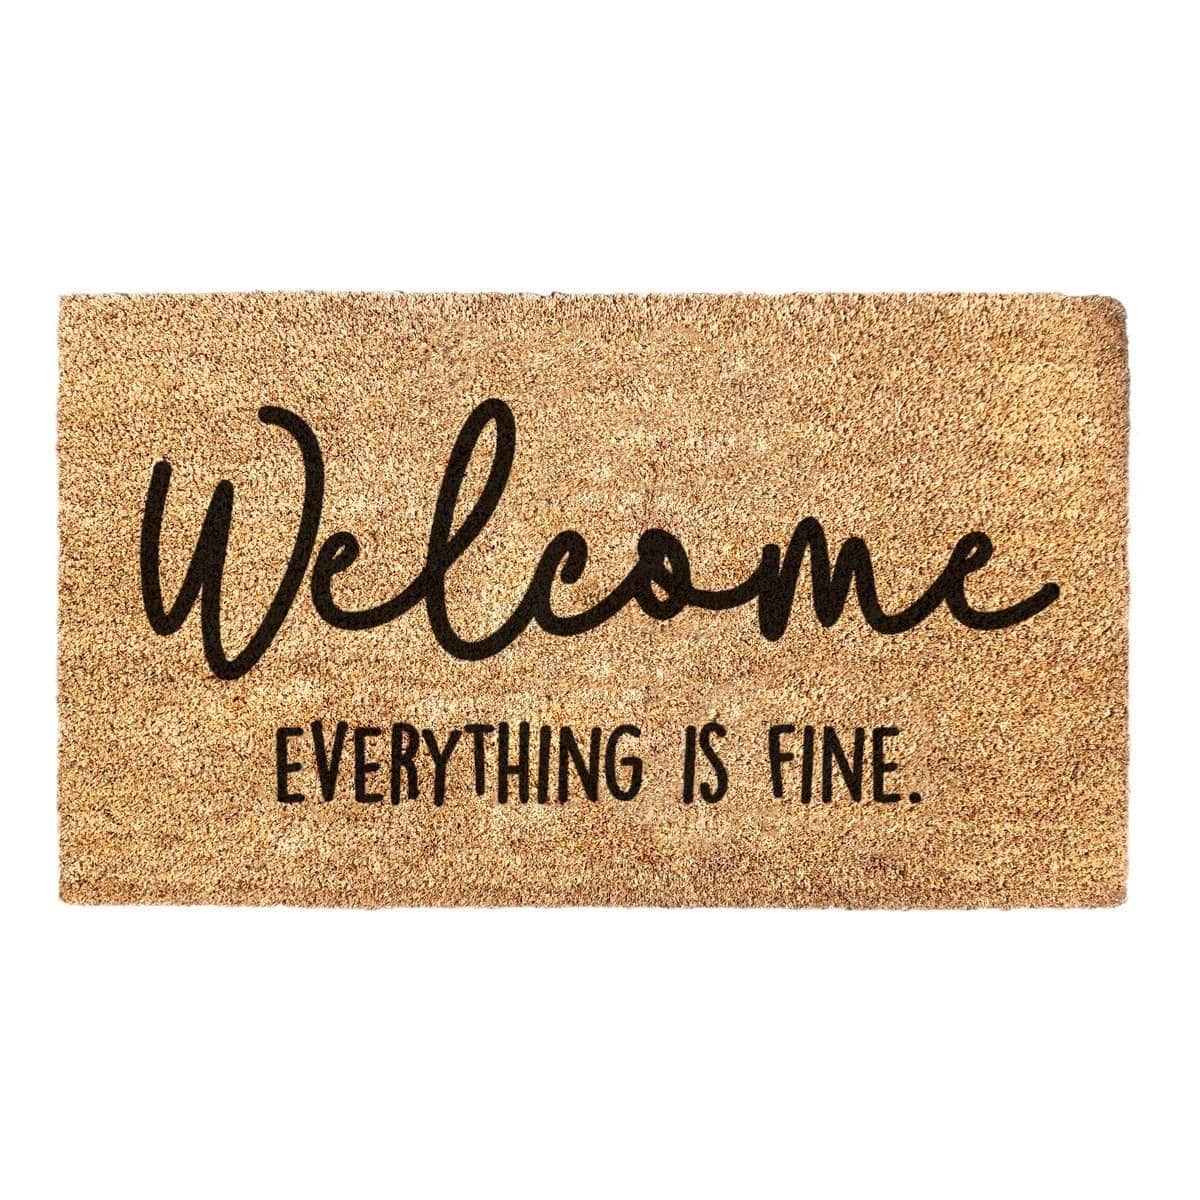 Welcome, Everything is fine - Doormat